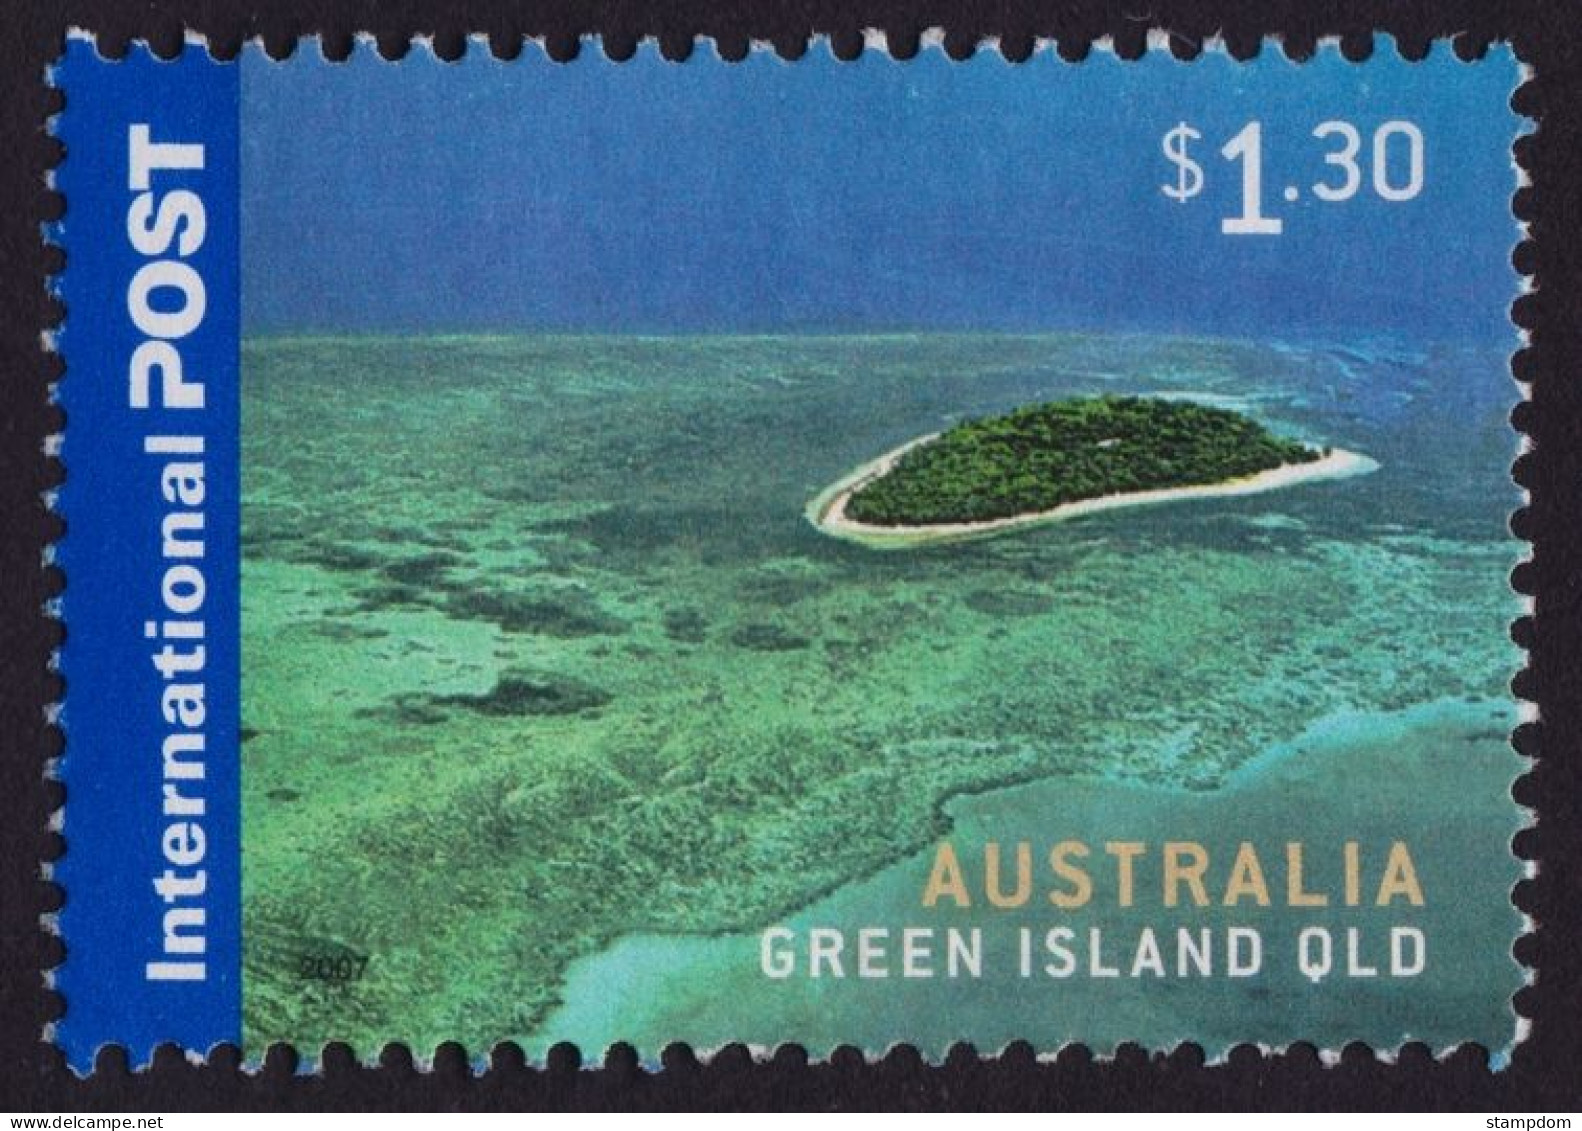 AUSTRALIA 2007 Islands $1.30 Green Island Sc#2629 USED @O425 - Gebraucht